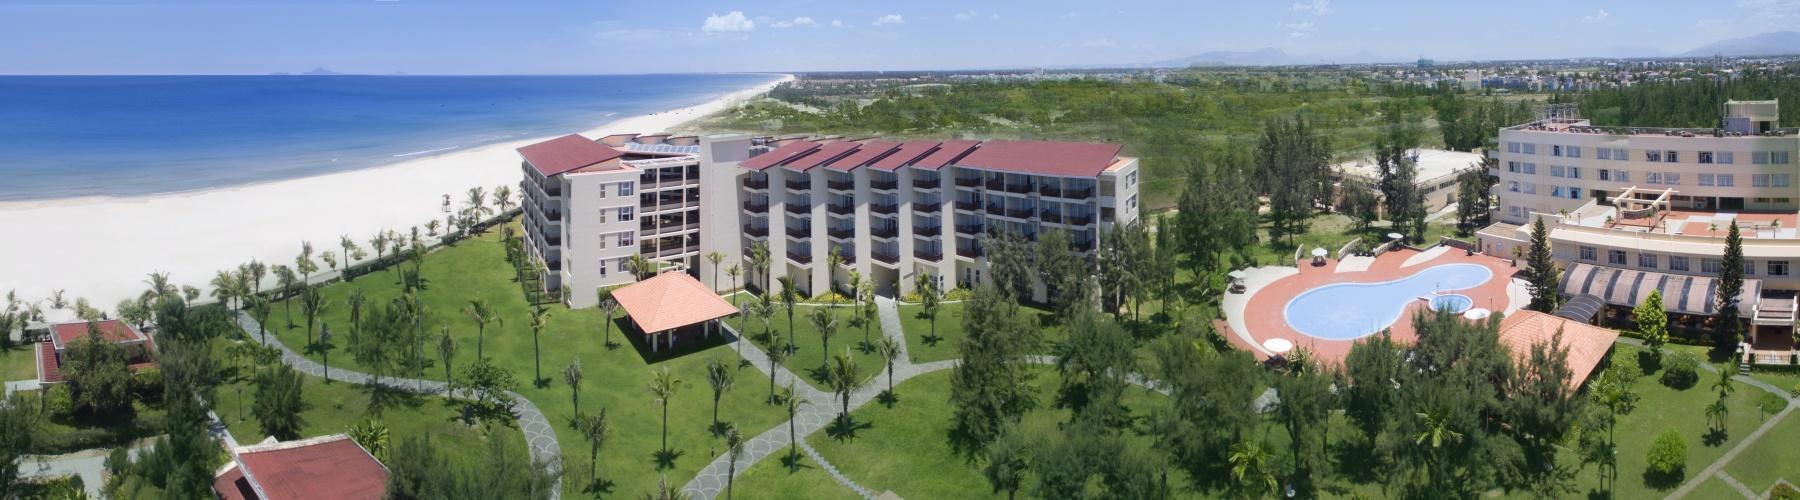 Отель Sandy Beach Non Nuoc Resort Da Nang Vietnam Managed by Centara